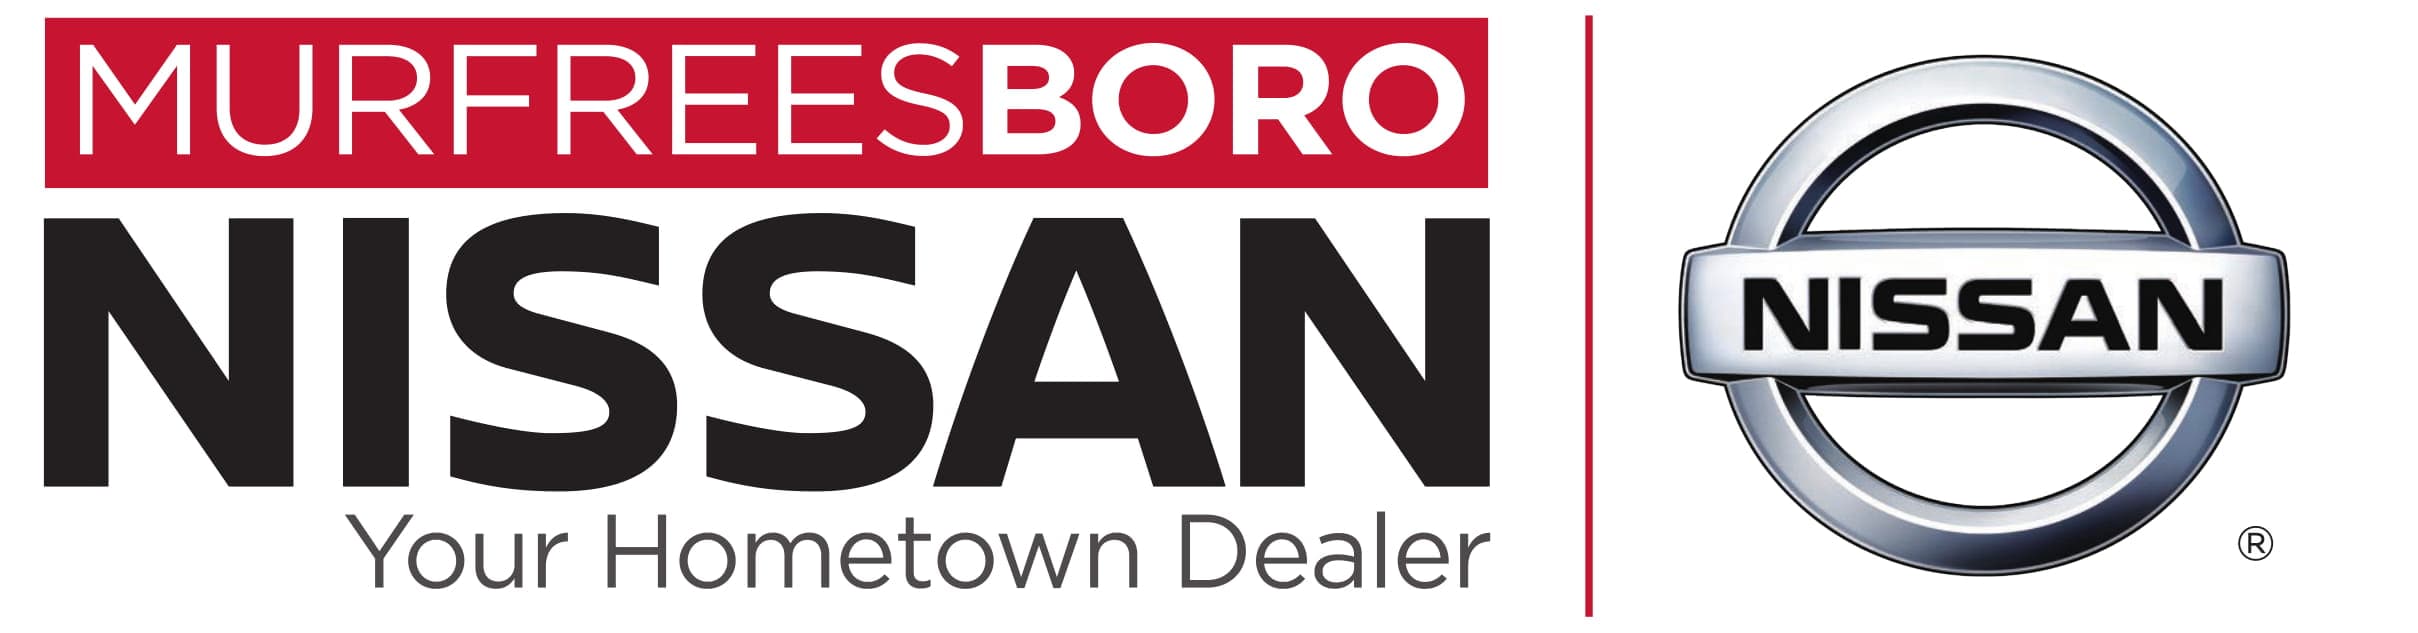 Used Car Dealership Logo - Used Cars for Sale in Murfreesboro TN | Murfreesboro Nissan Page 1